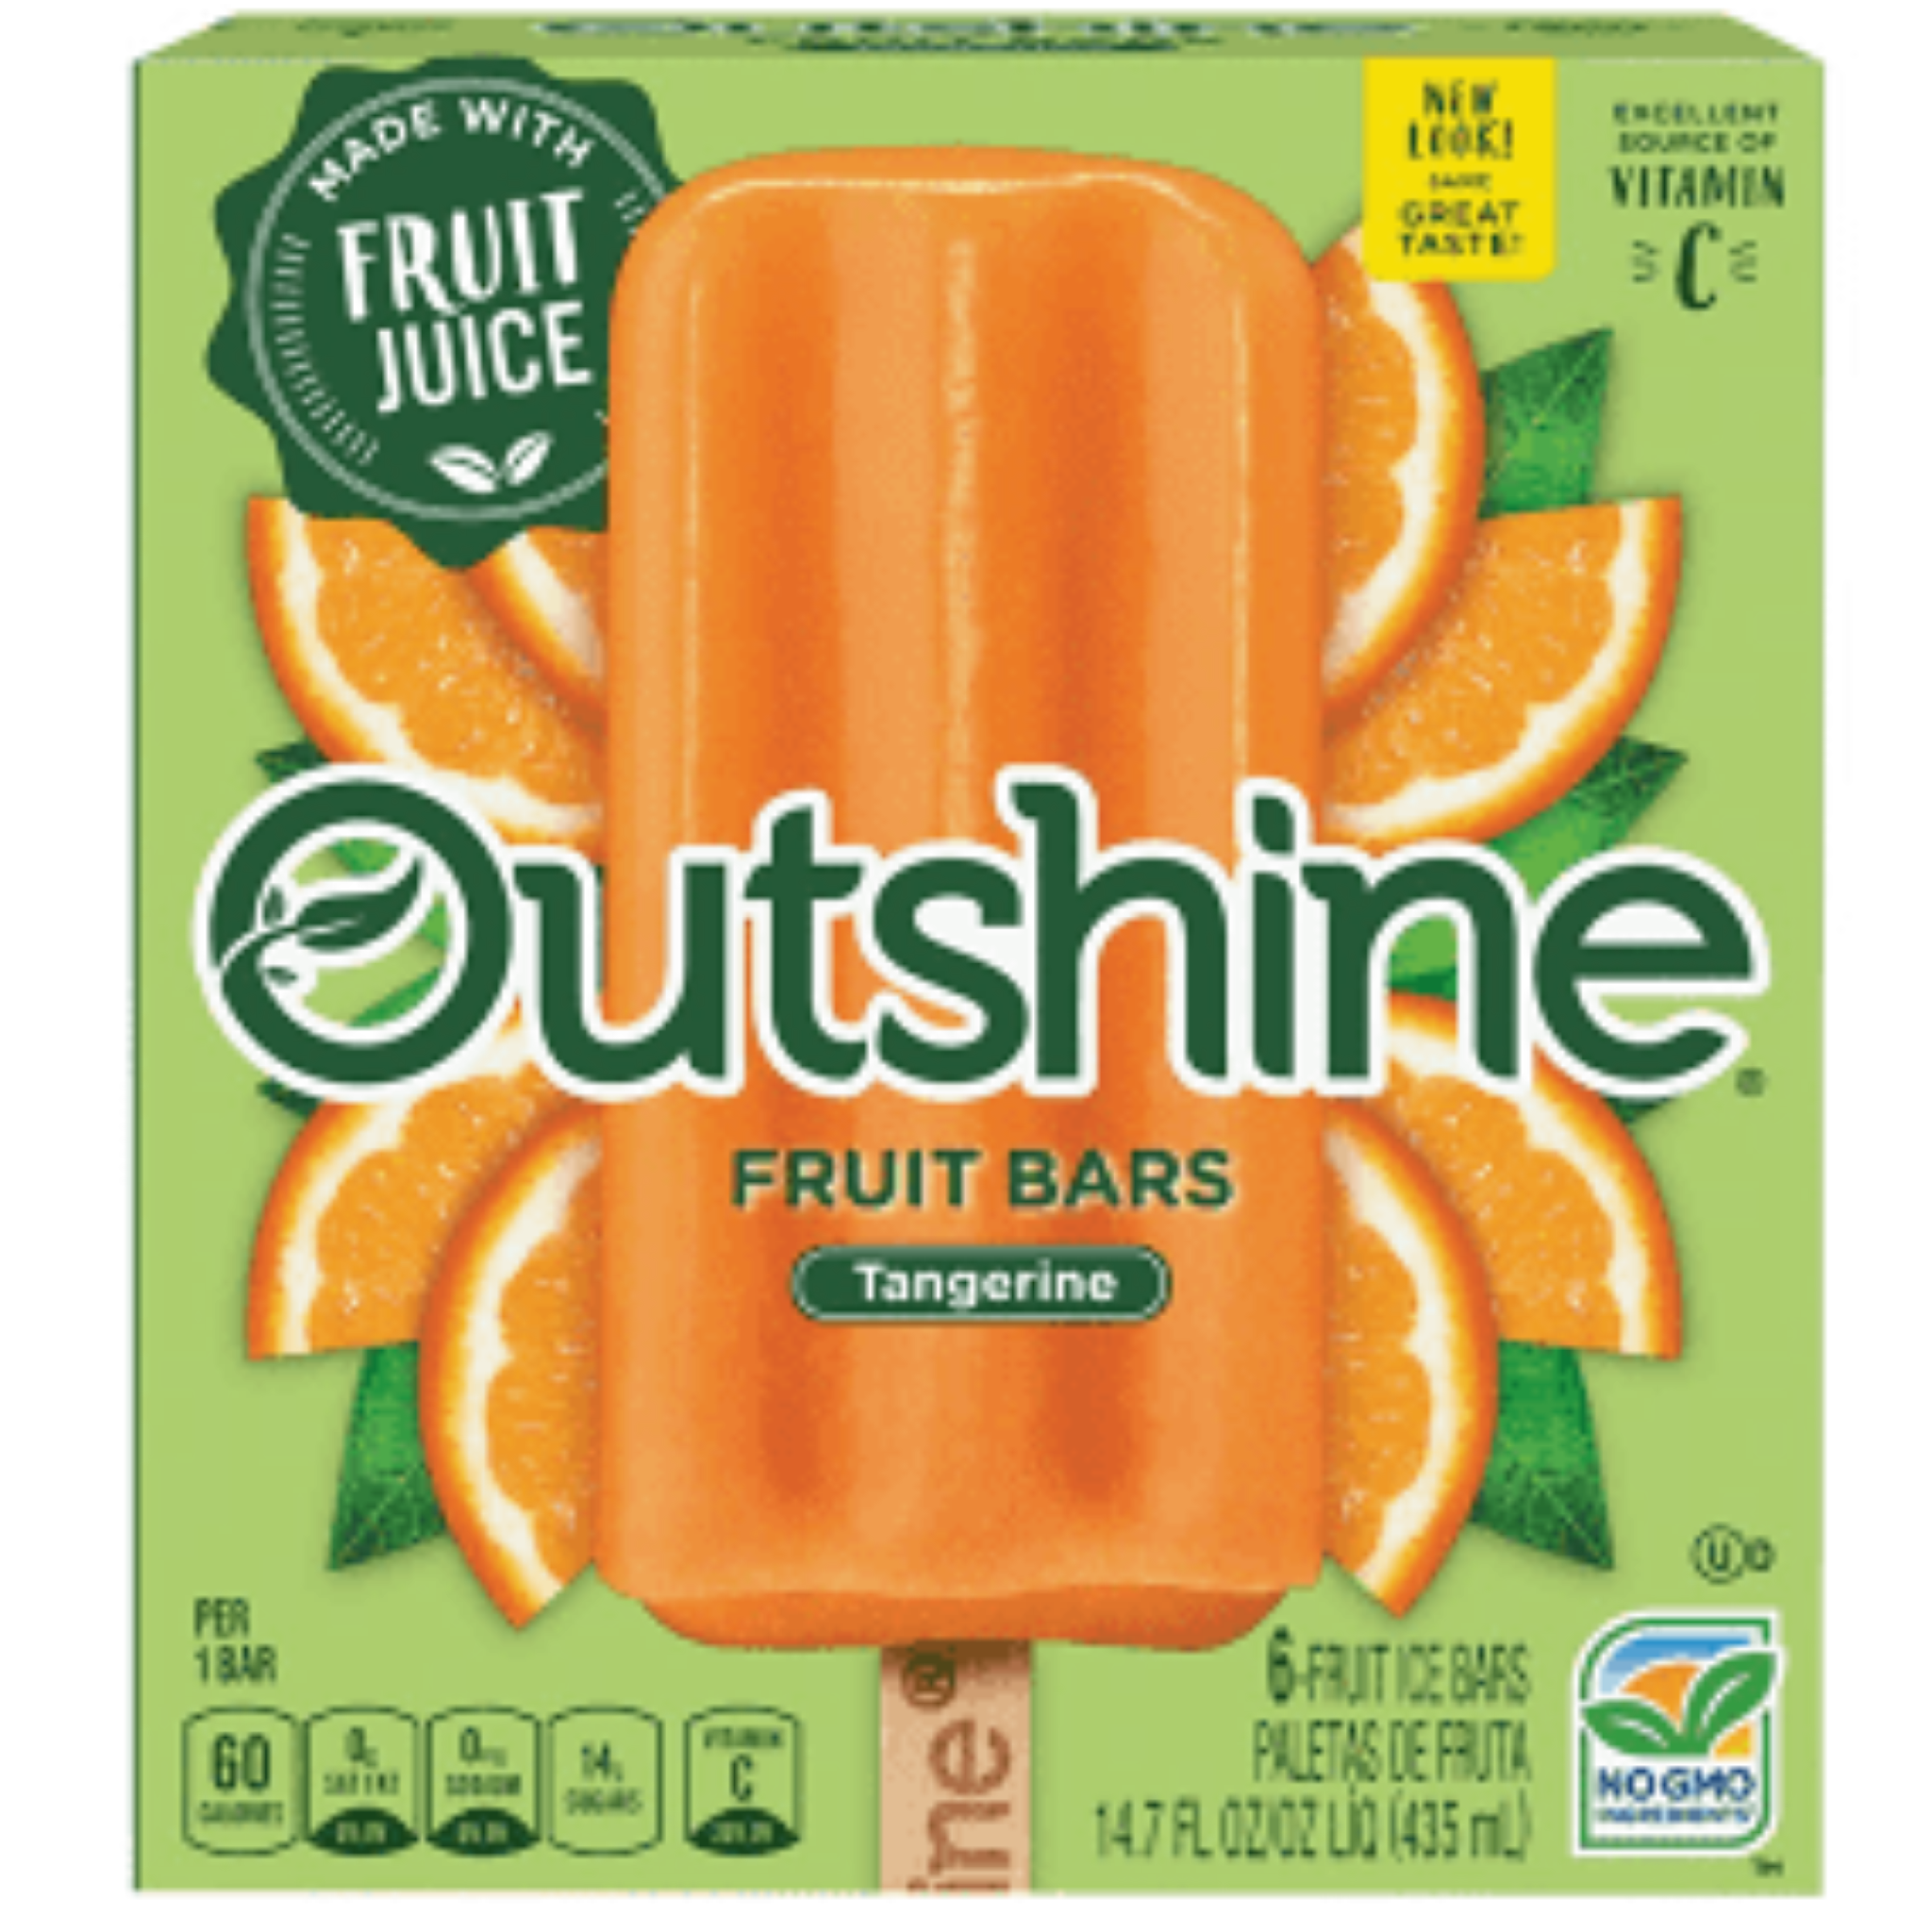 Outshine Fruit Bar Tangerine